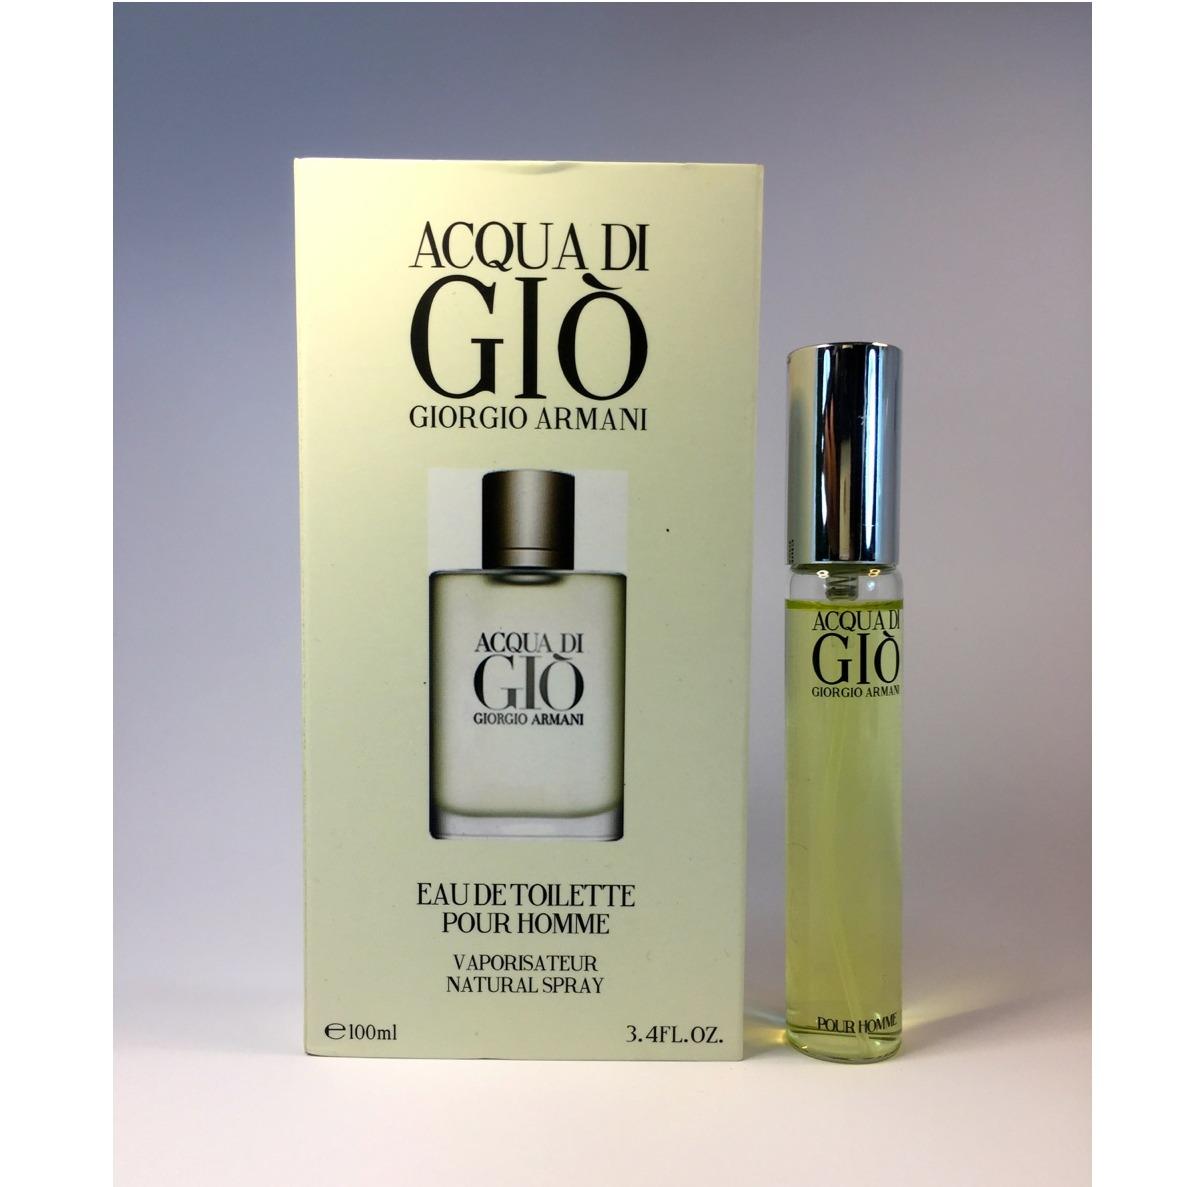 giorgio armani travel size perfume